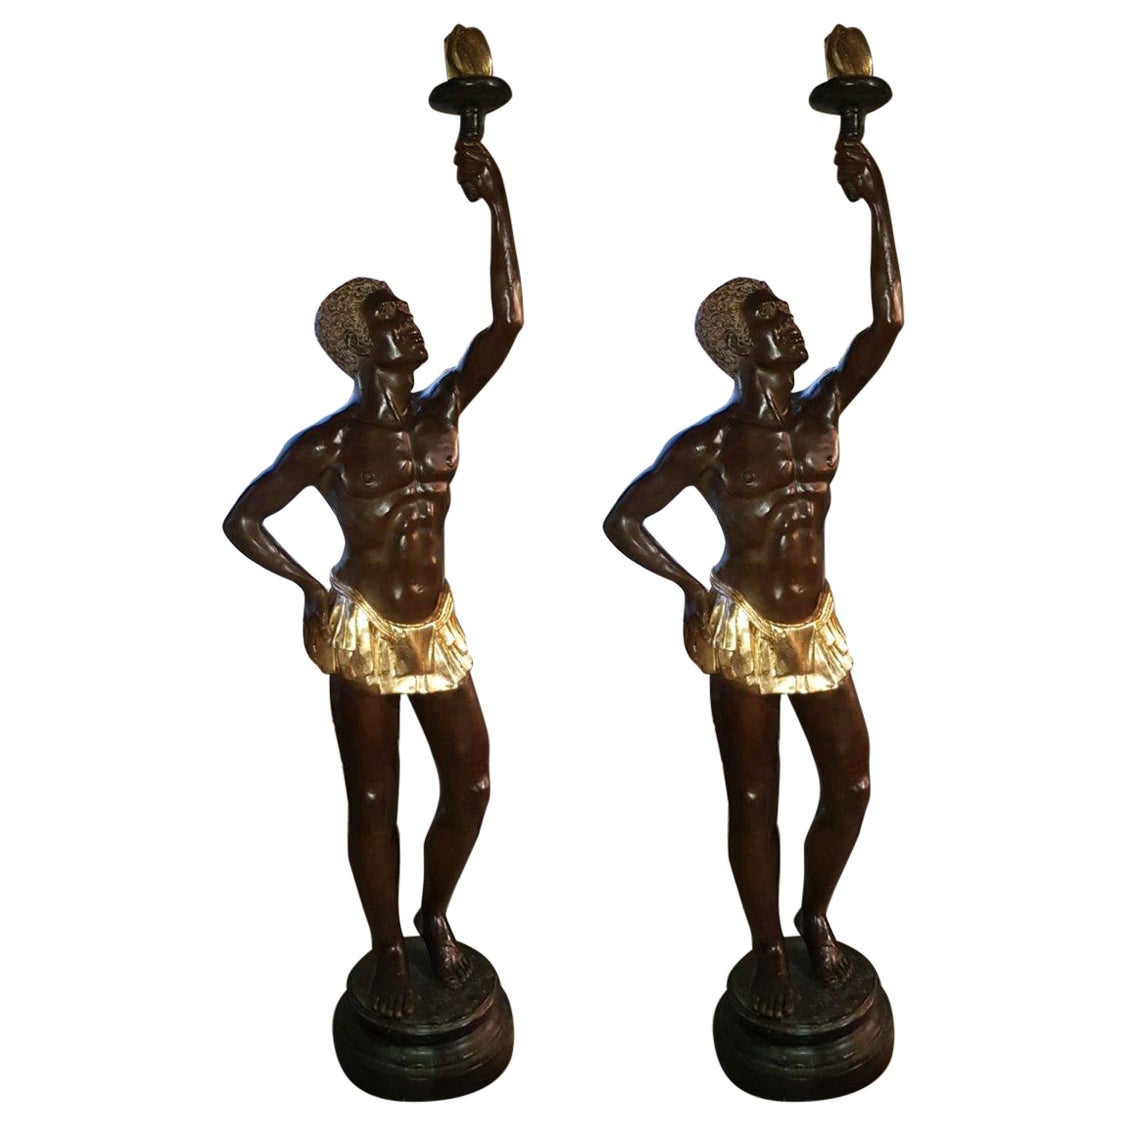 Pair of Gigantic Bronze Statutes Representing Nubians Carrying Torches